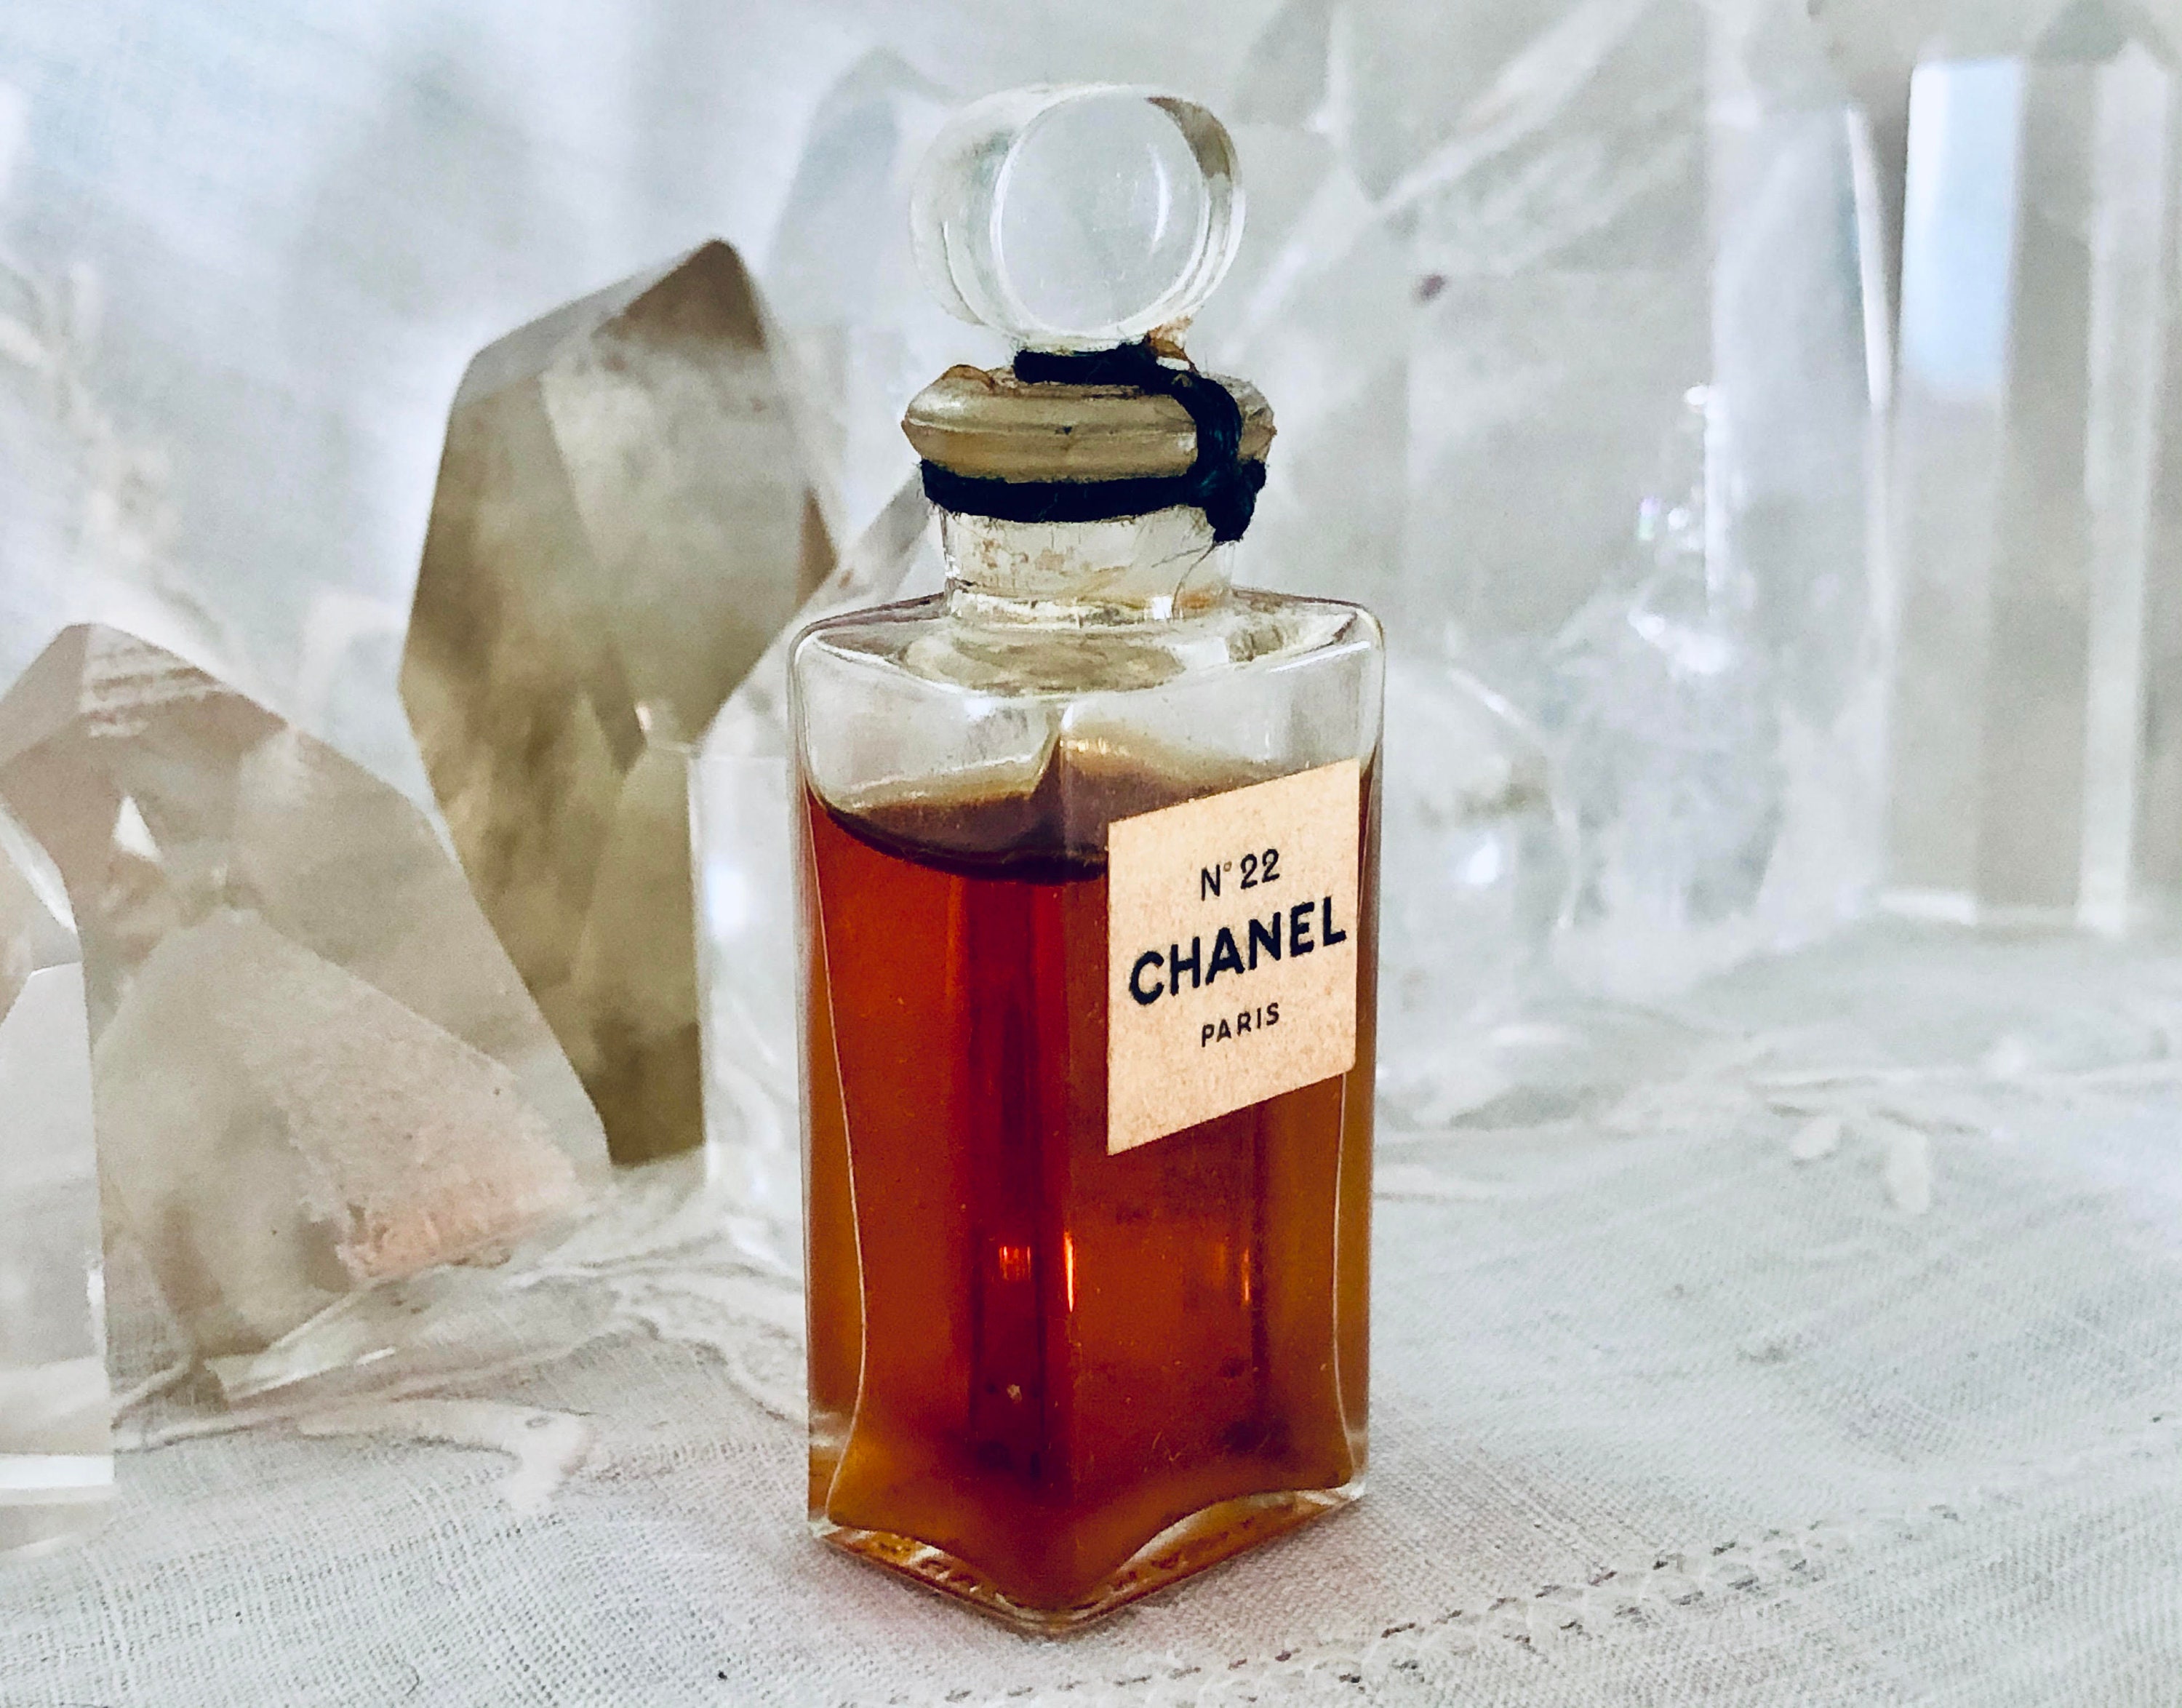 Chanel No. 22 7.5 Ml. or 0.25 Oz Parfum Extrait 1921 -  Finland